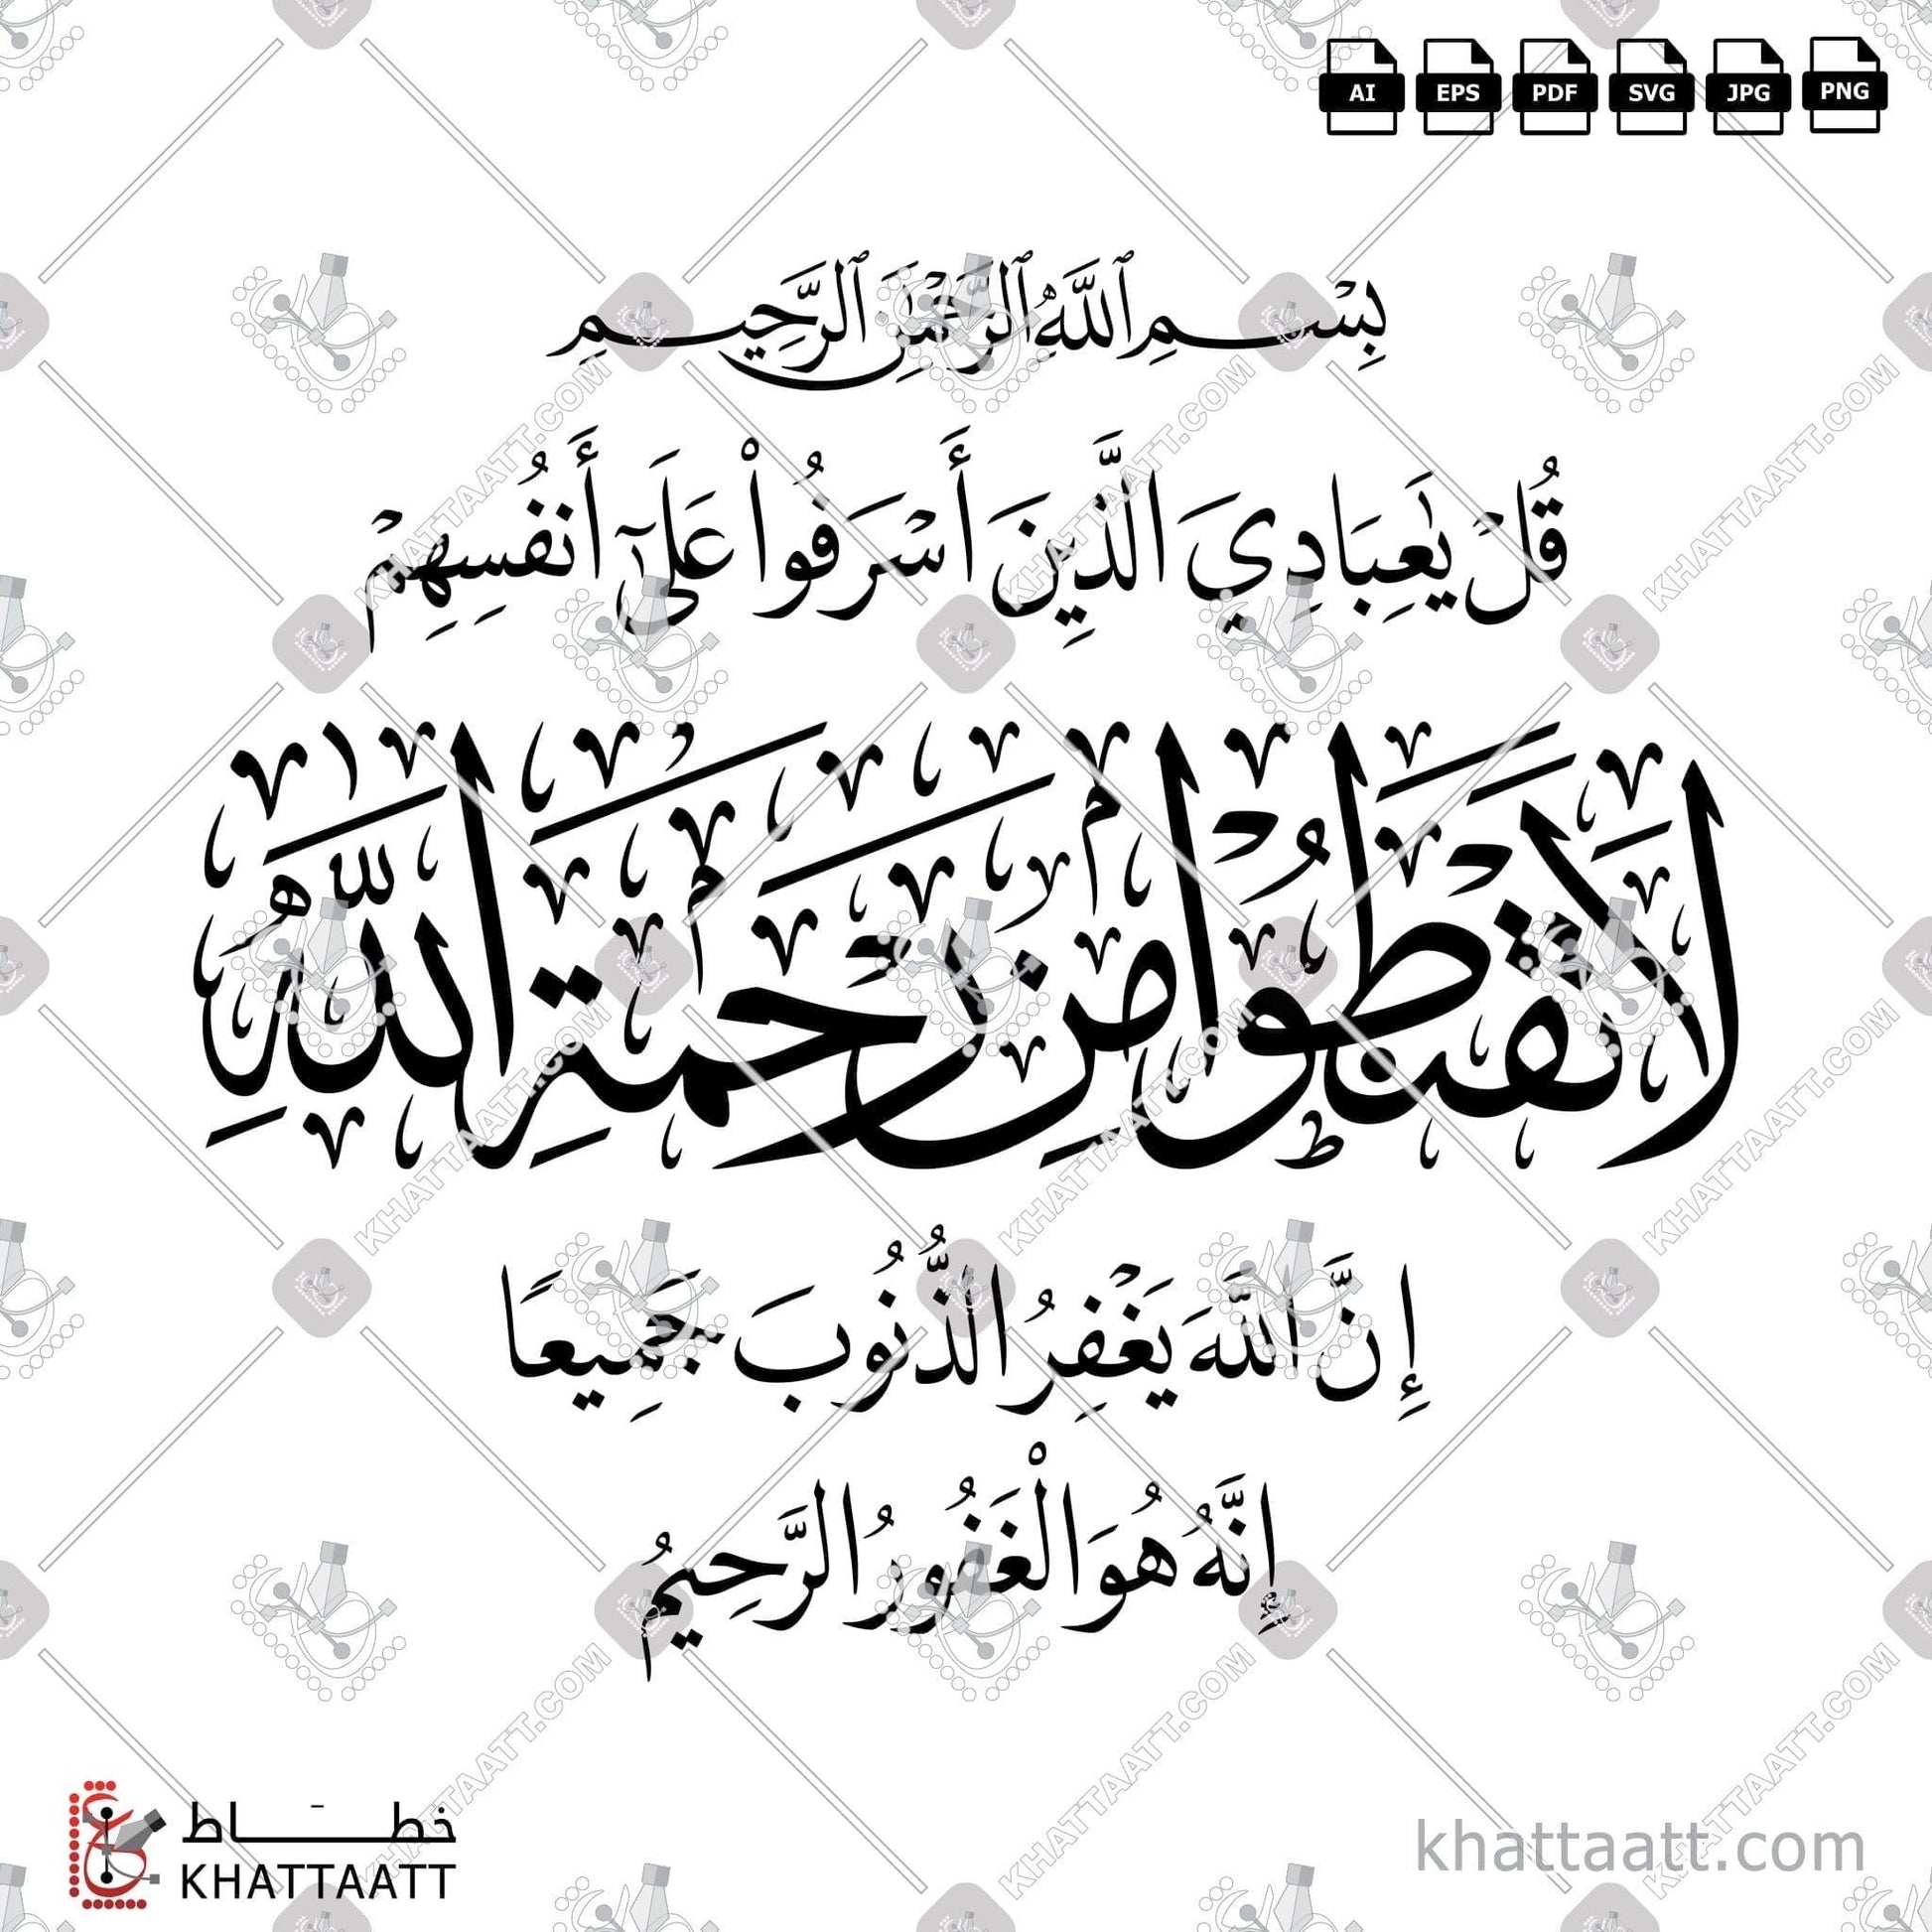 Download Arabic Calligraphy of قل يا عبادي الذين أسرفوا على أنفسهم لا تقنطوا من رحمة الله in Thuluth - خط الثلث in vector and .png